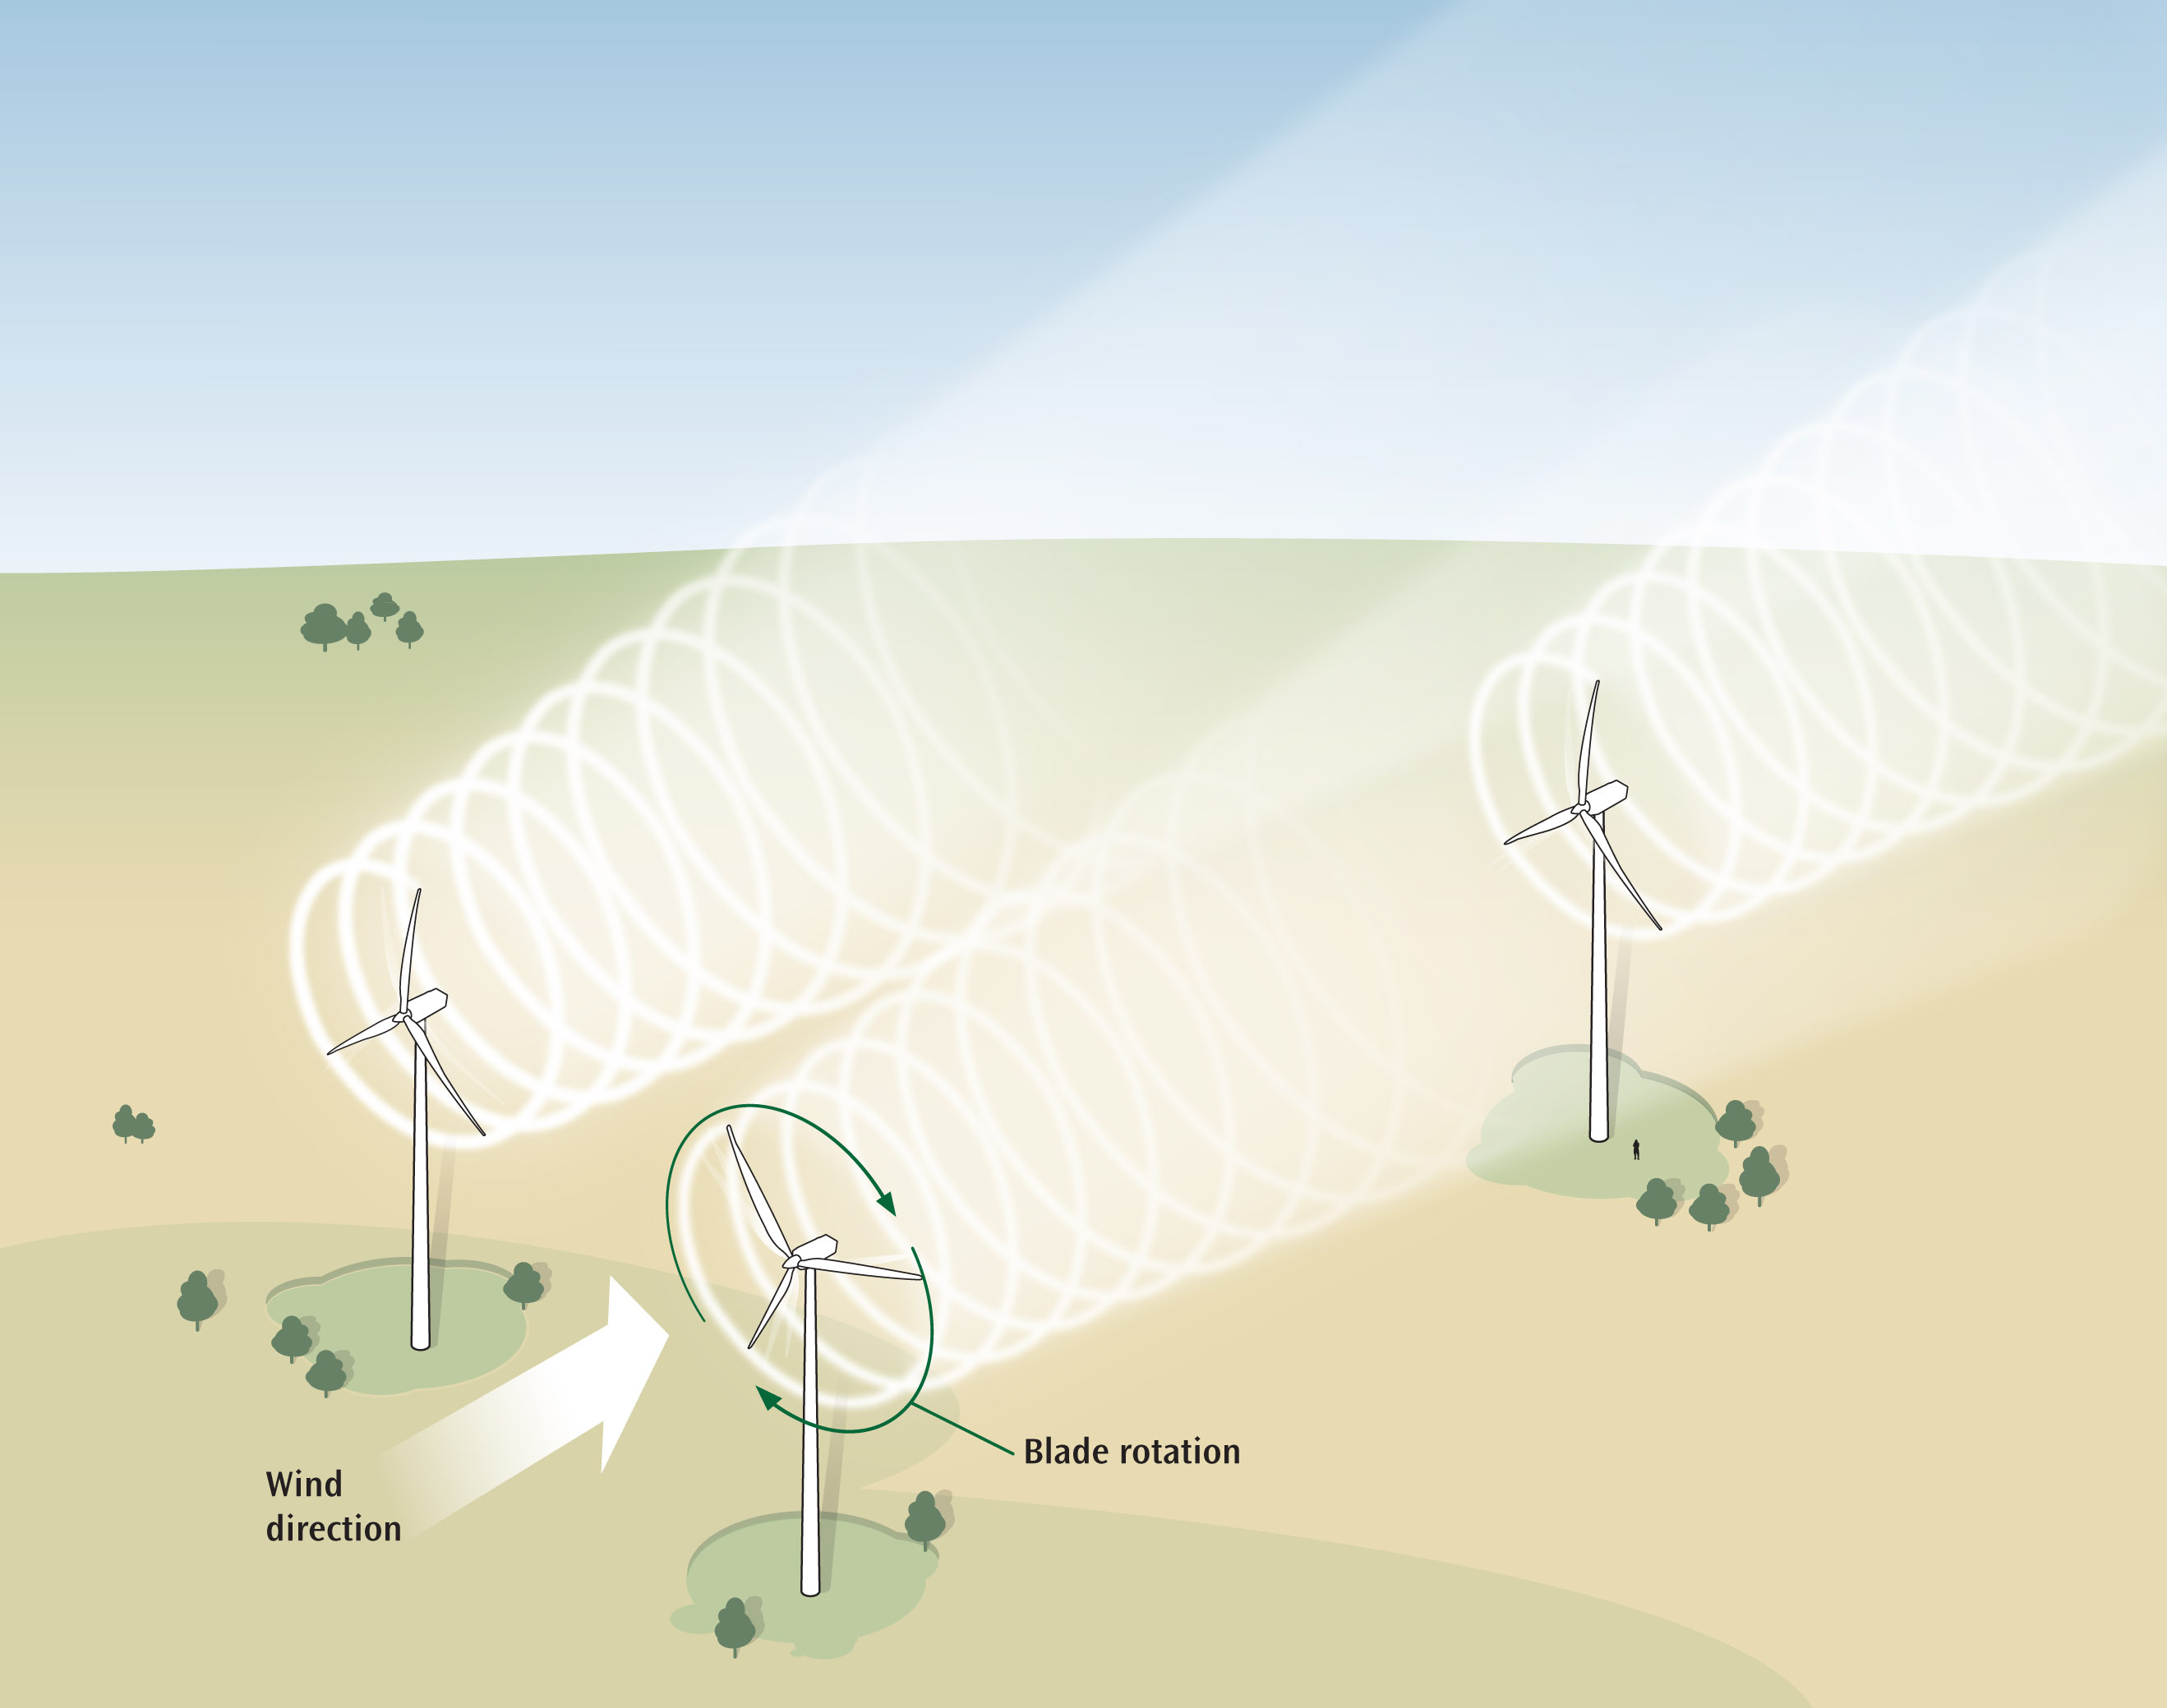 USA: DOE Breaks Ground on New Wind Turbine Test Facility